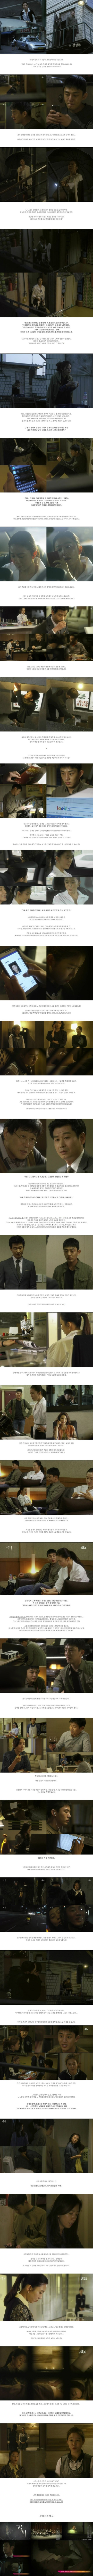 episode 9 captures for the Korean drama 'Secret Love Affair'